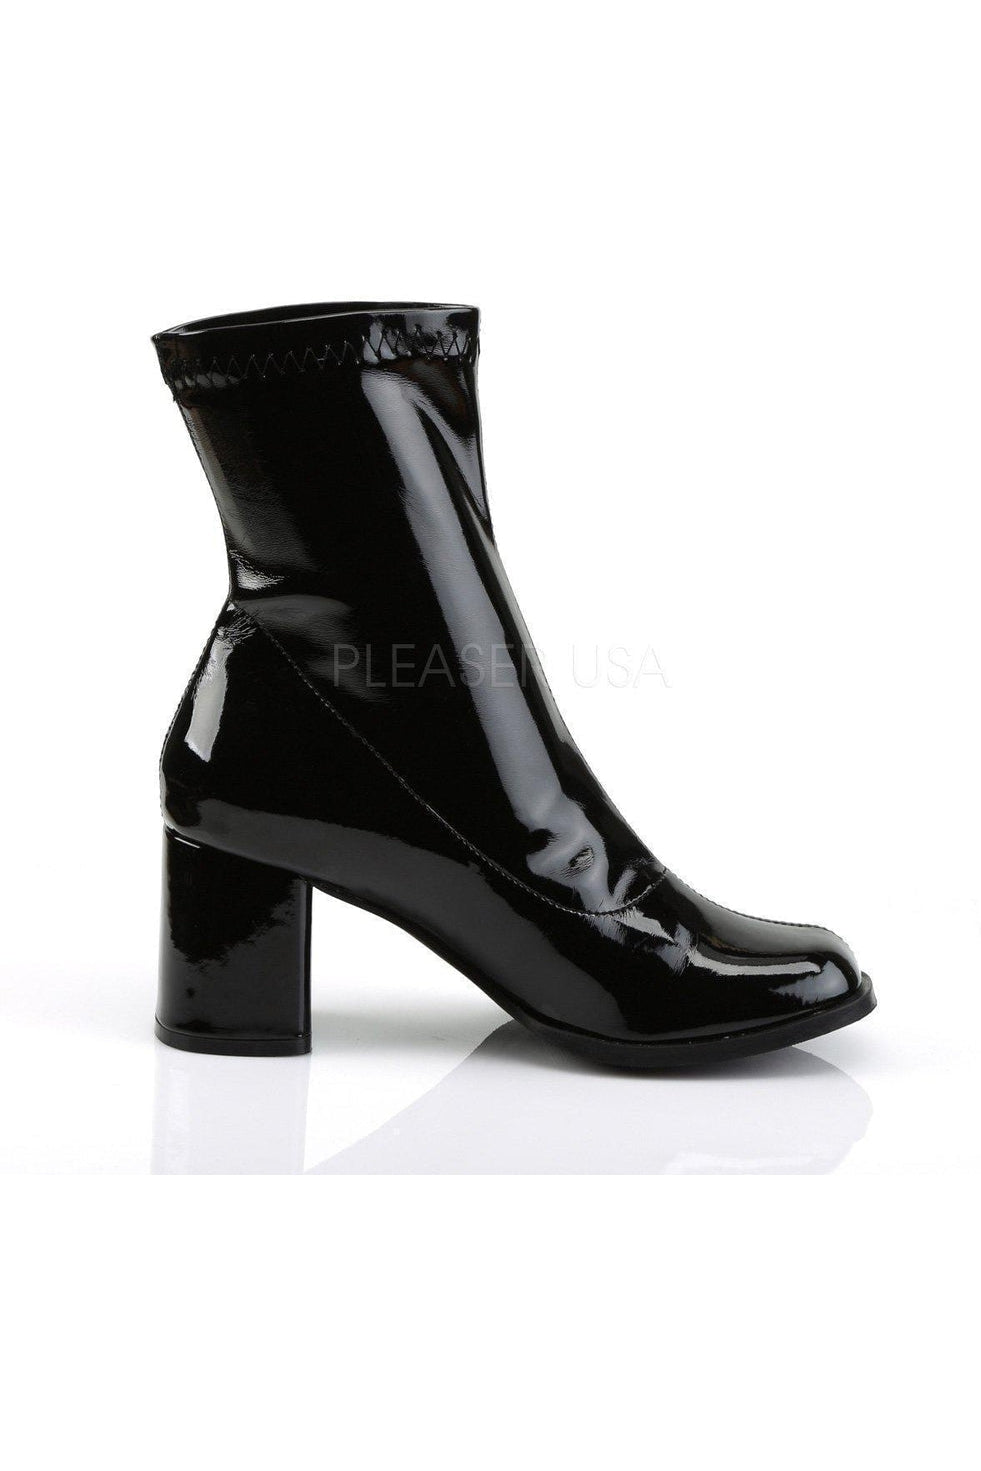 GOGO-150 Costume GoGo Boot | Black Patent-Funtasma-SEXYSHOES.COM